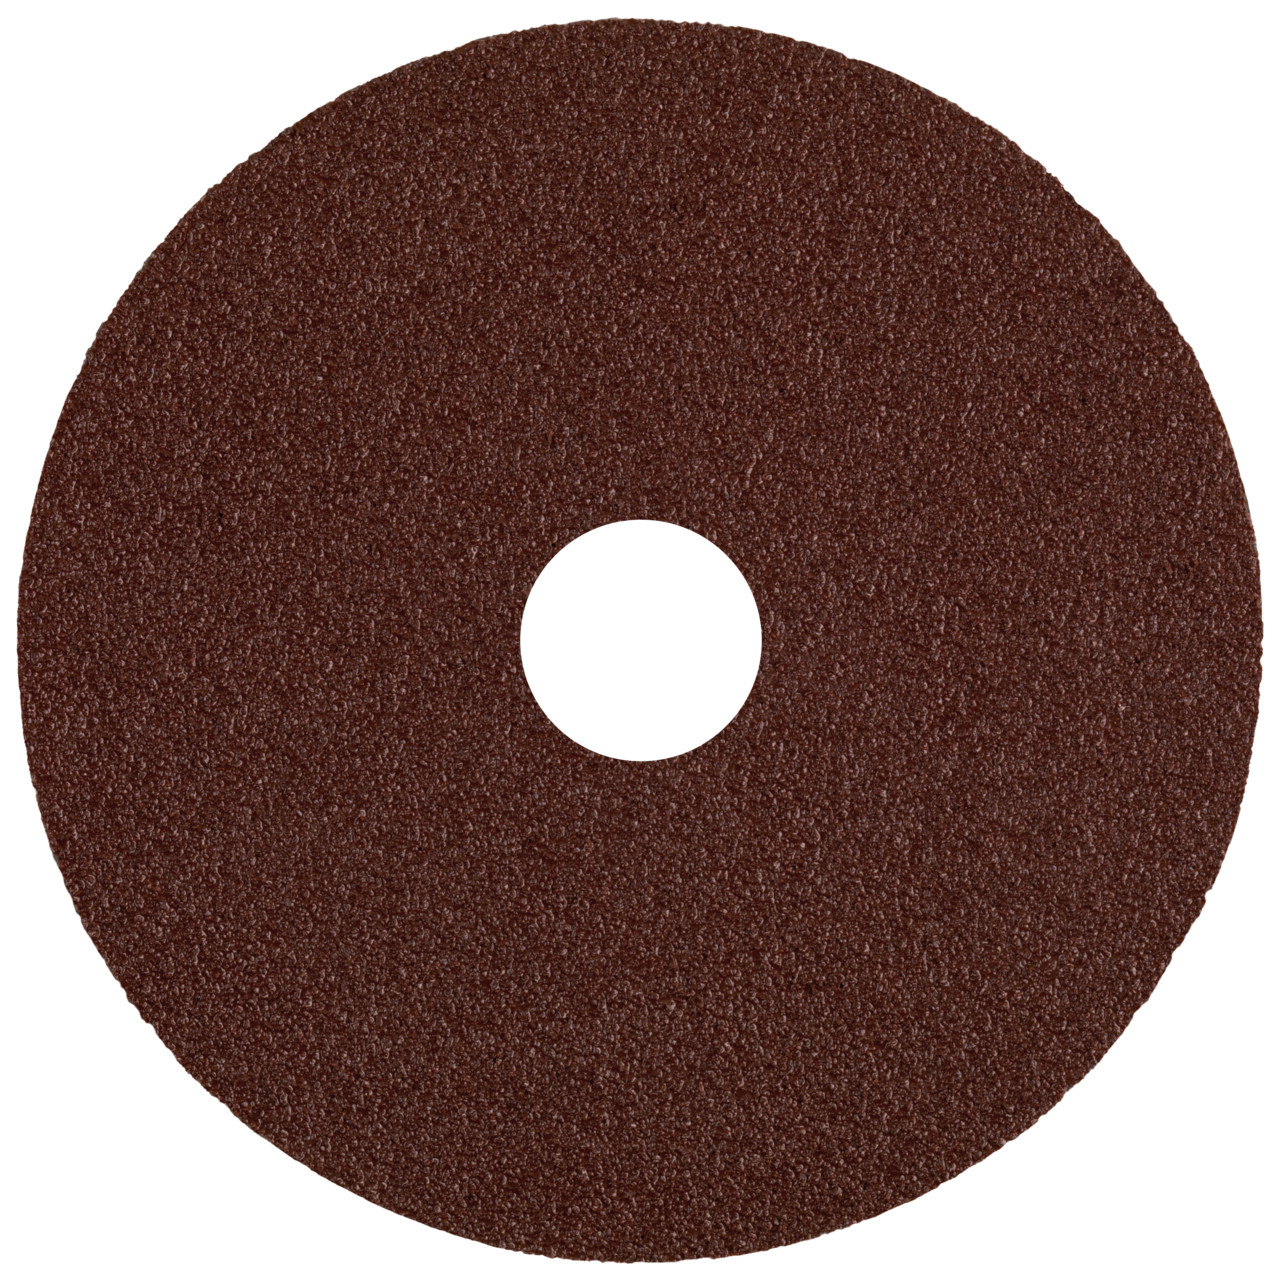 Tyrolit A-B02 V Vulcanised fibre disc DxH 125x22 For steel, non-ferrous metals and wood, P50, shape: DISC, Art. 34286705